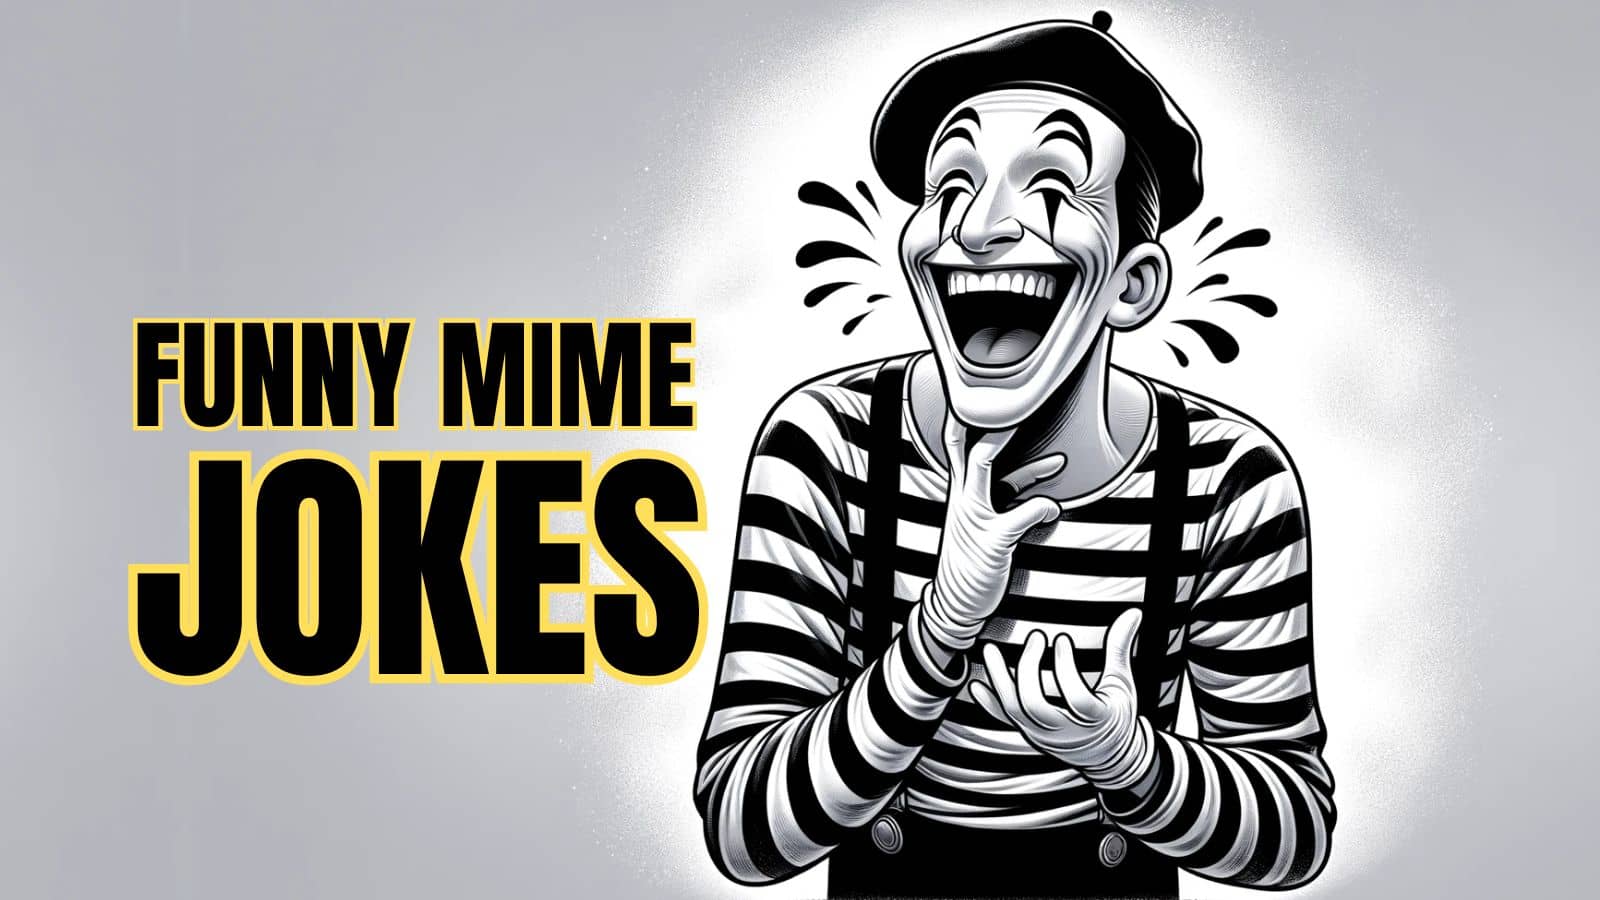 Funny Mime Jokes on Theatre